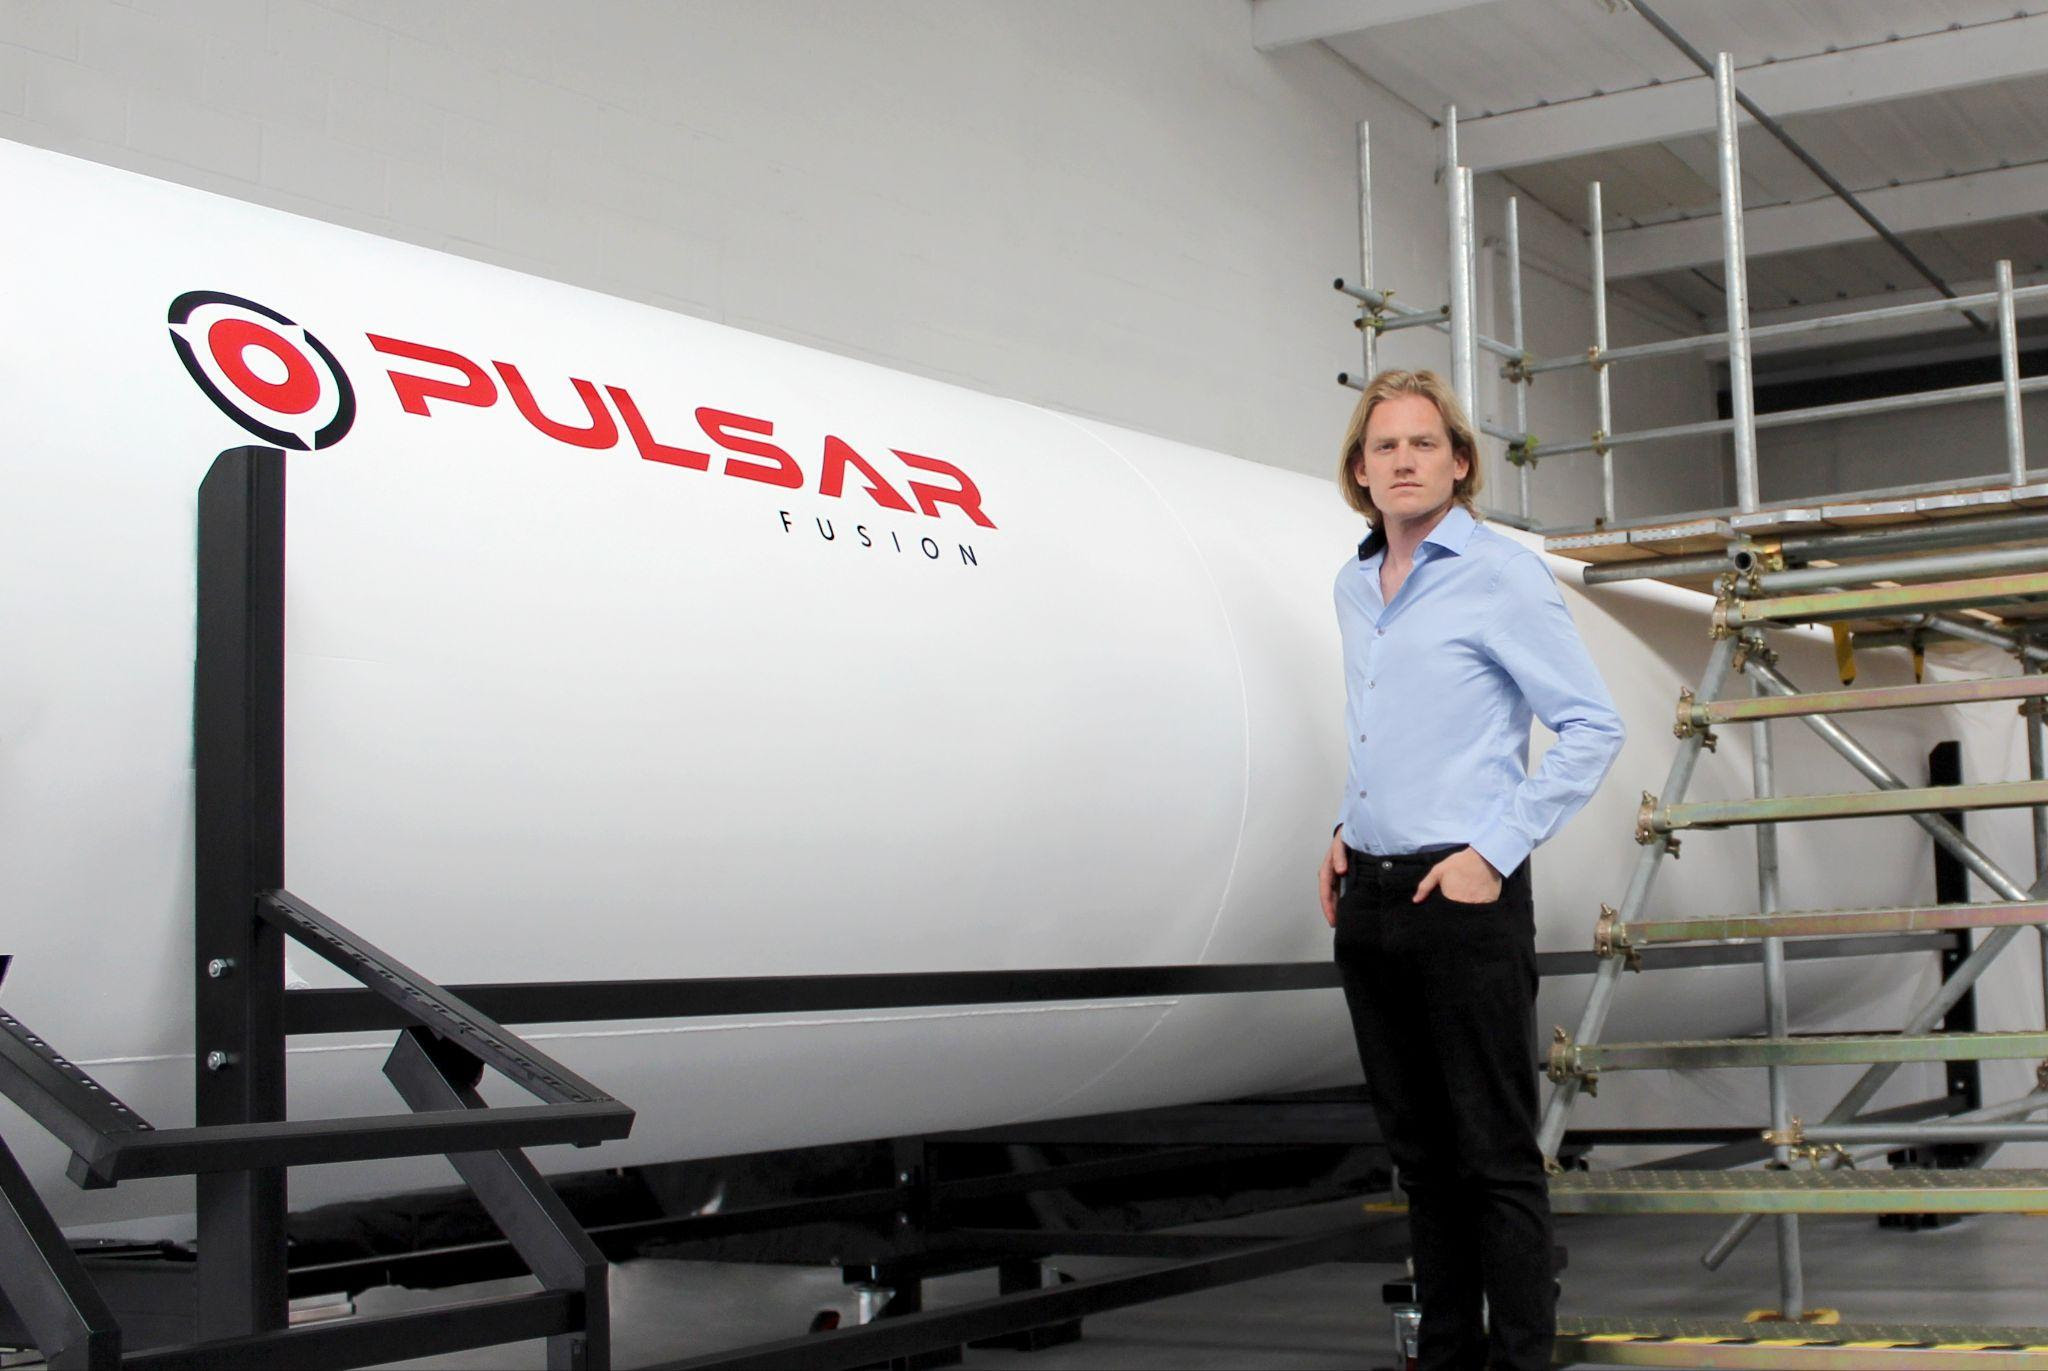 Pulsar Fusion CEO Richard Dinan